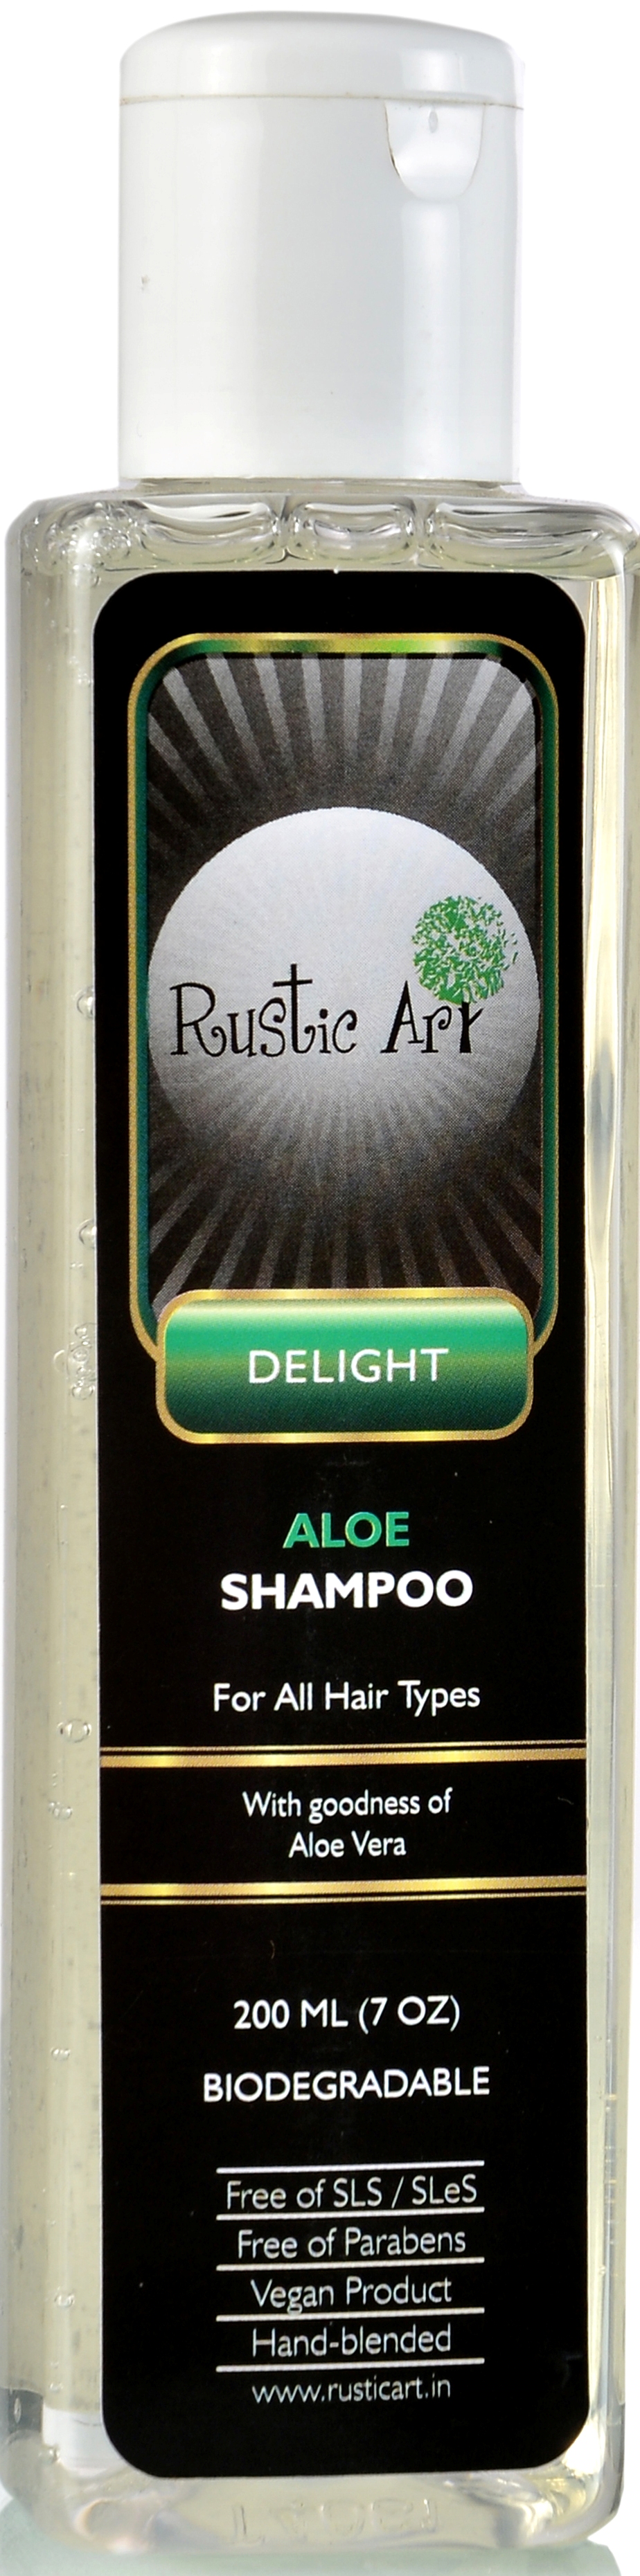 Buy Rustic Art Biodegradable Aloe Shampoo at Best Price Online